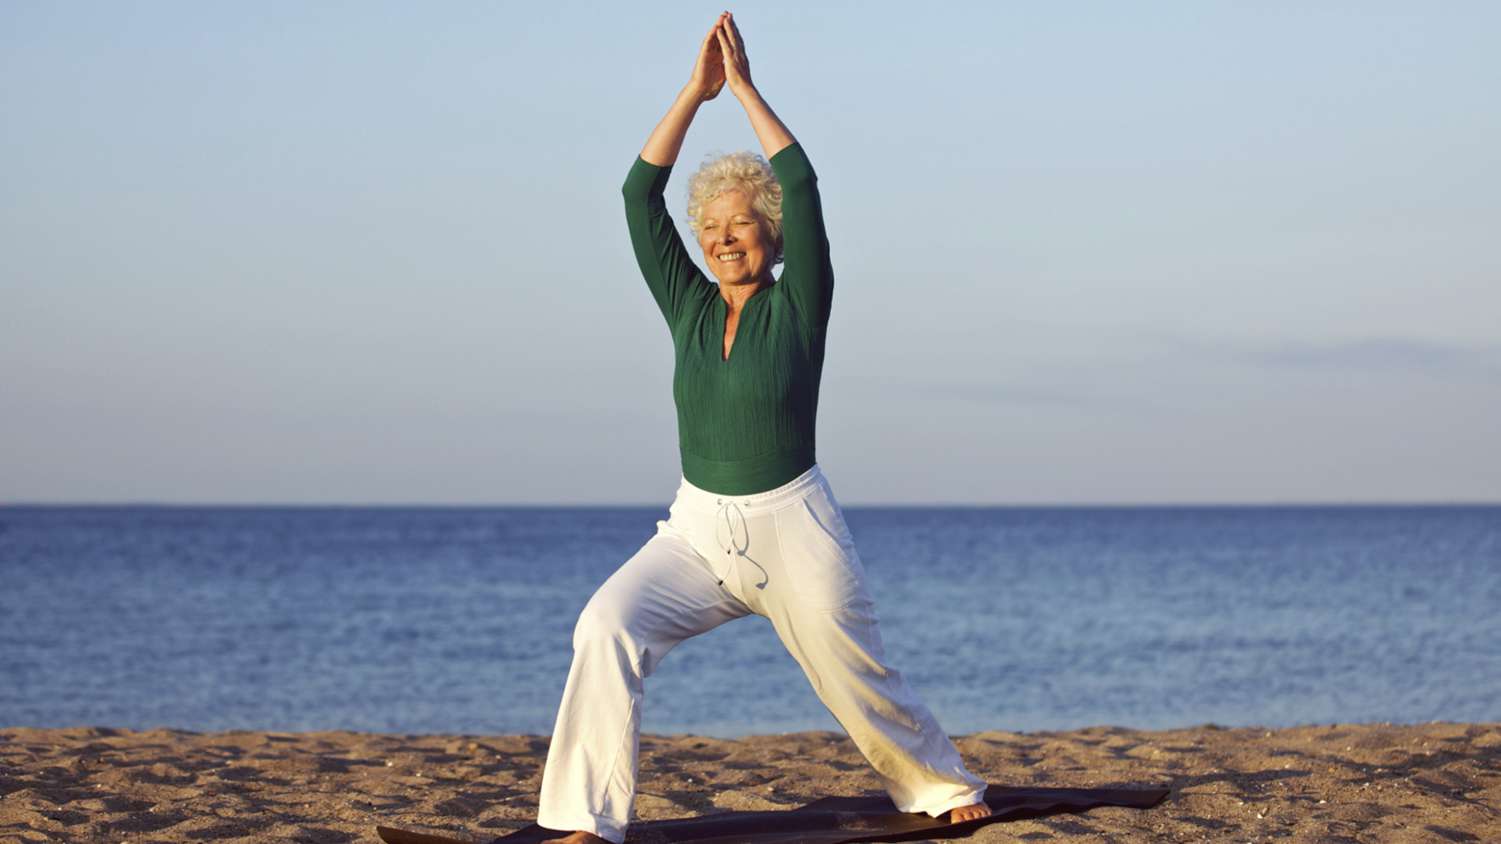 amritendu paul recommends Older Women Doing Yoga